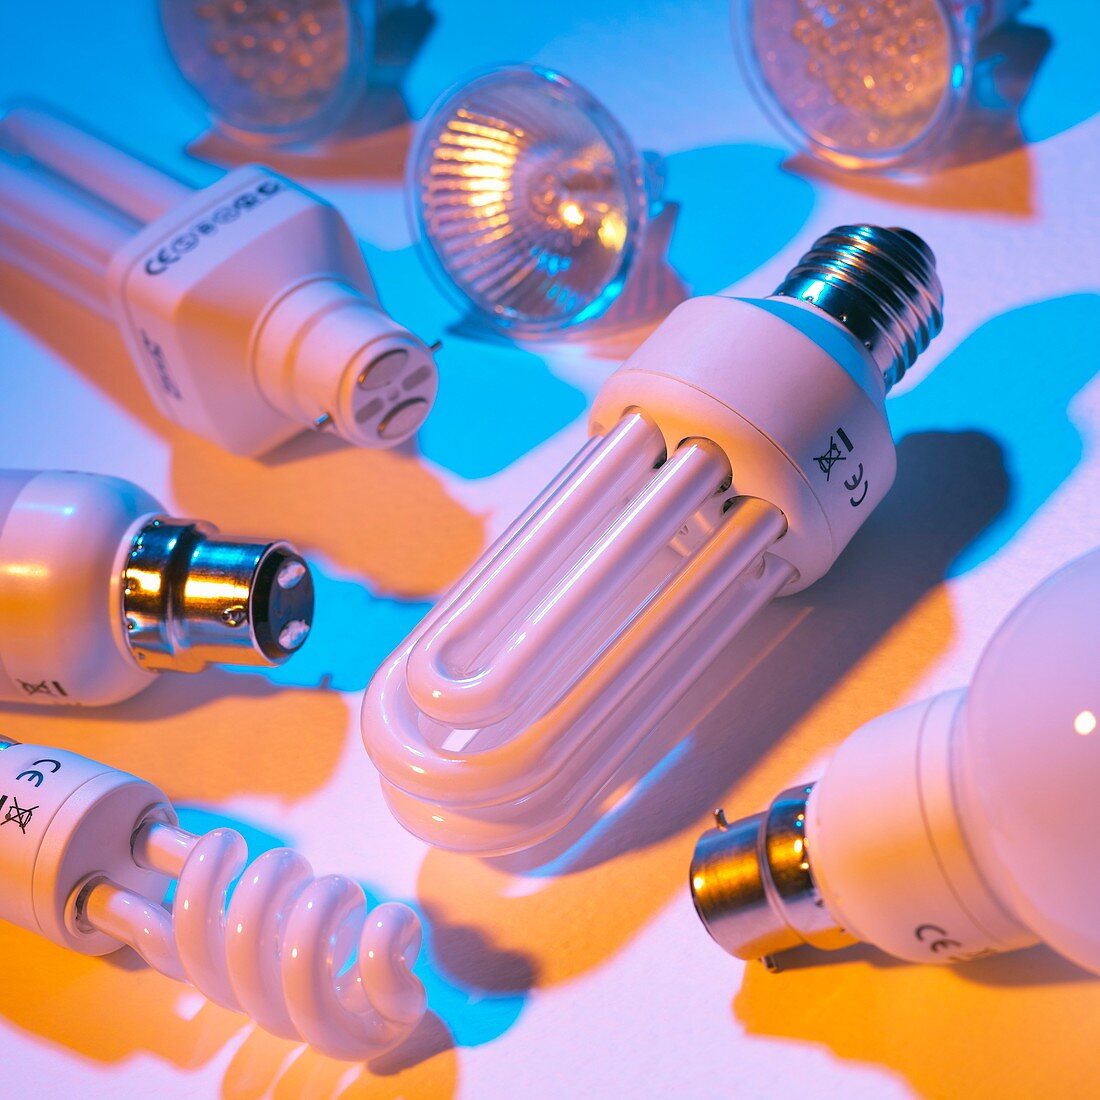 Low energy light bulbs